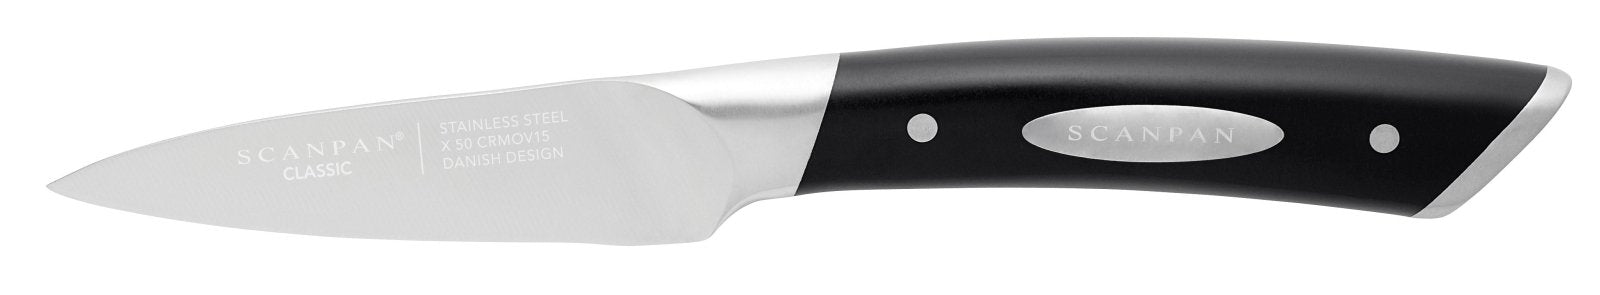 Scanpan Classic 7 Piece Deco Knife Block Set - SP92030700 - The Cotswold Knife Company